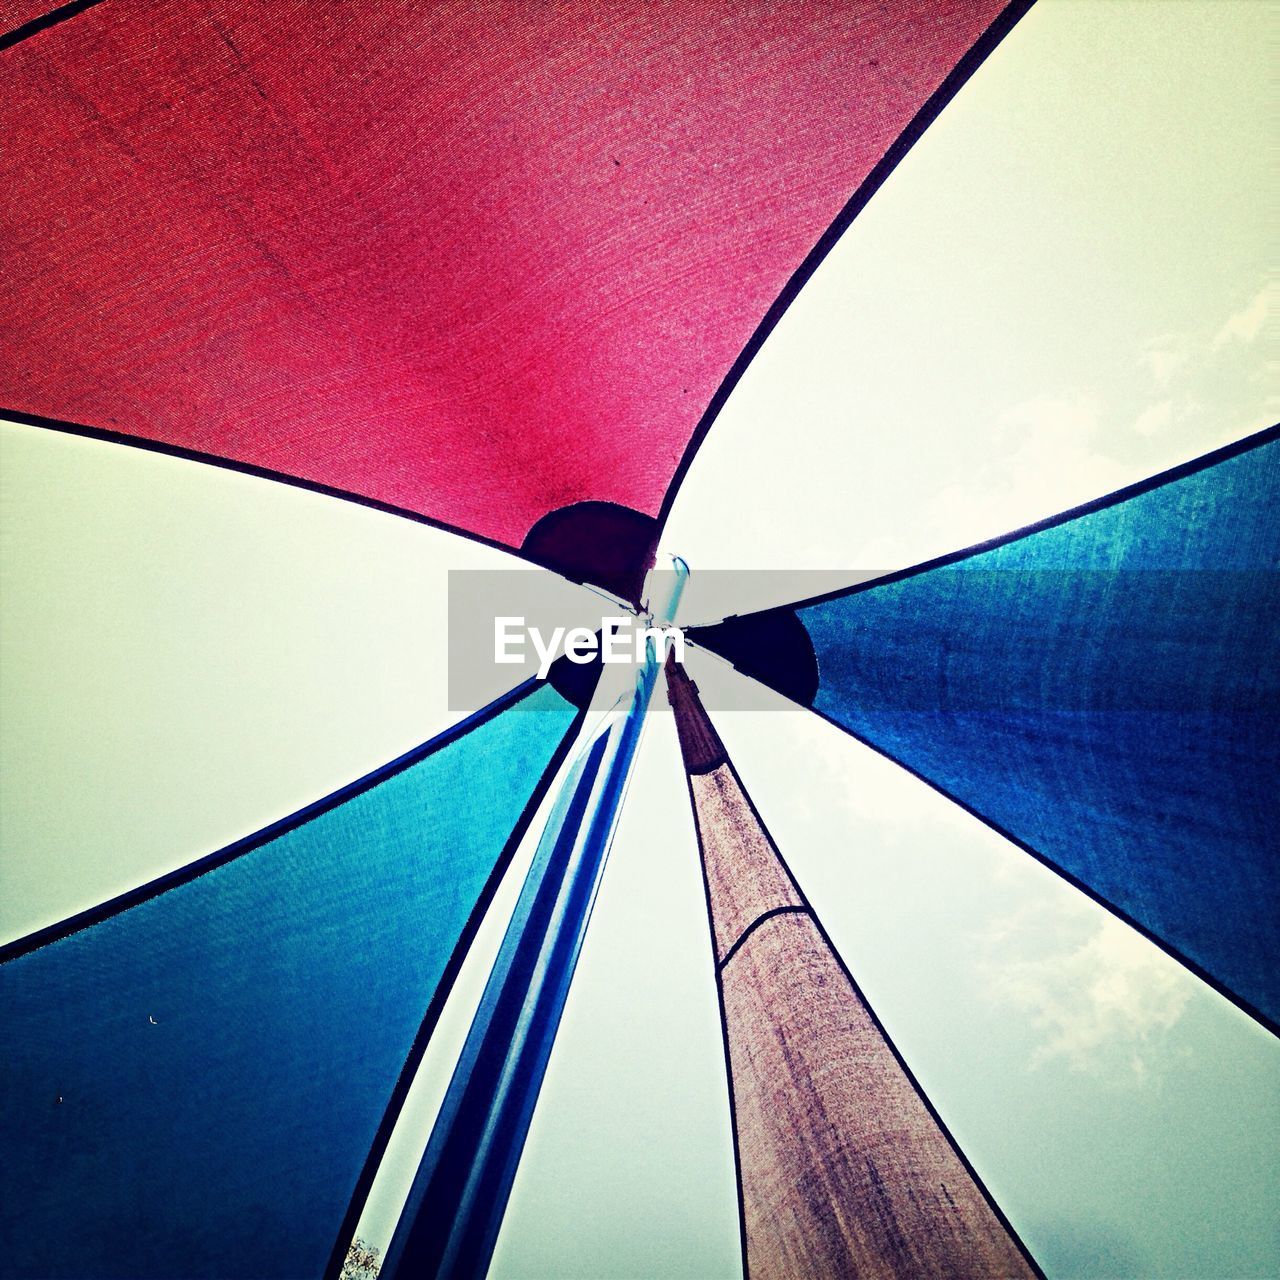 Directly below view of beach umbrella